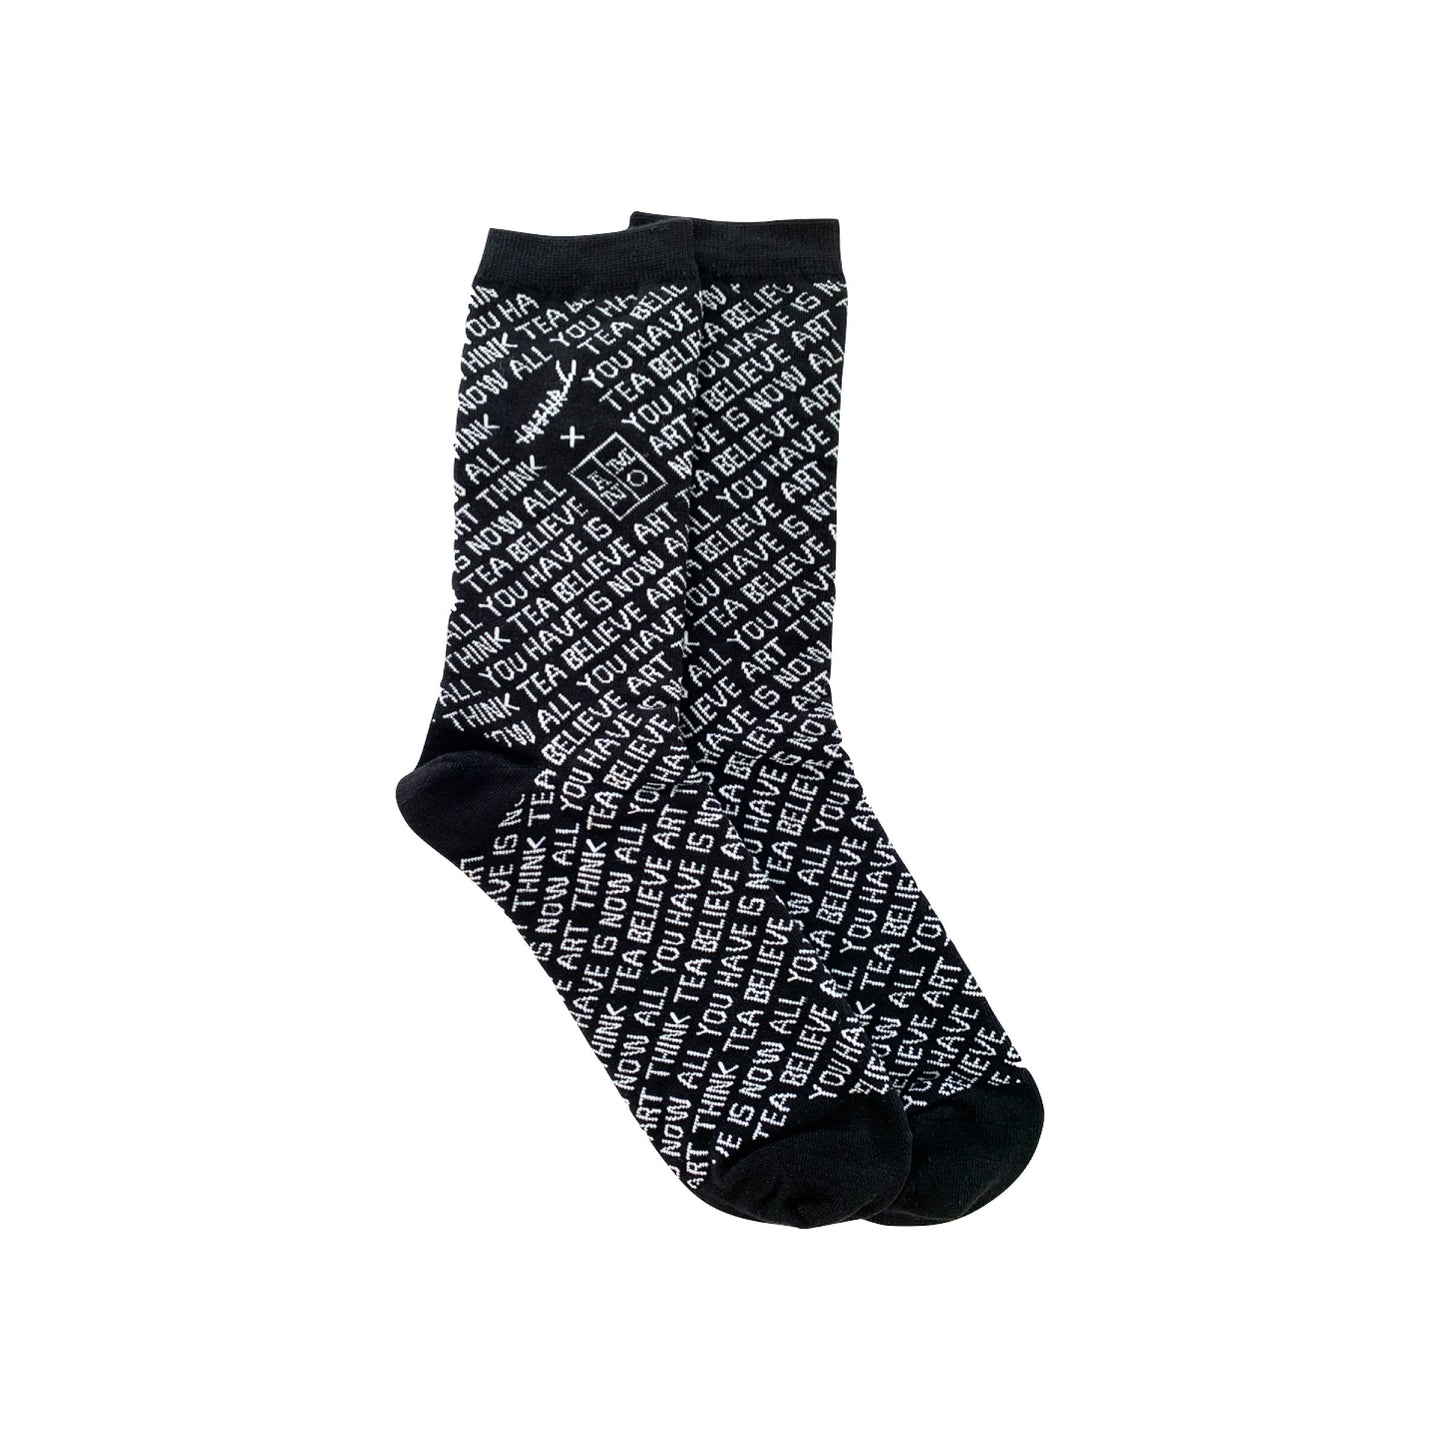 The INJURY x ANMO socks black